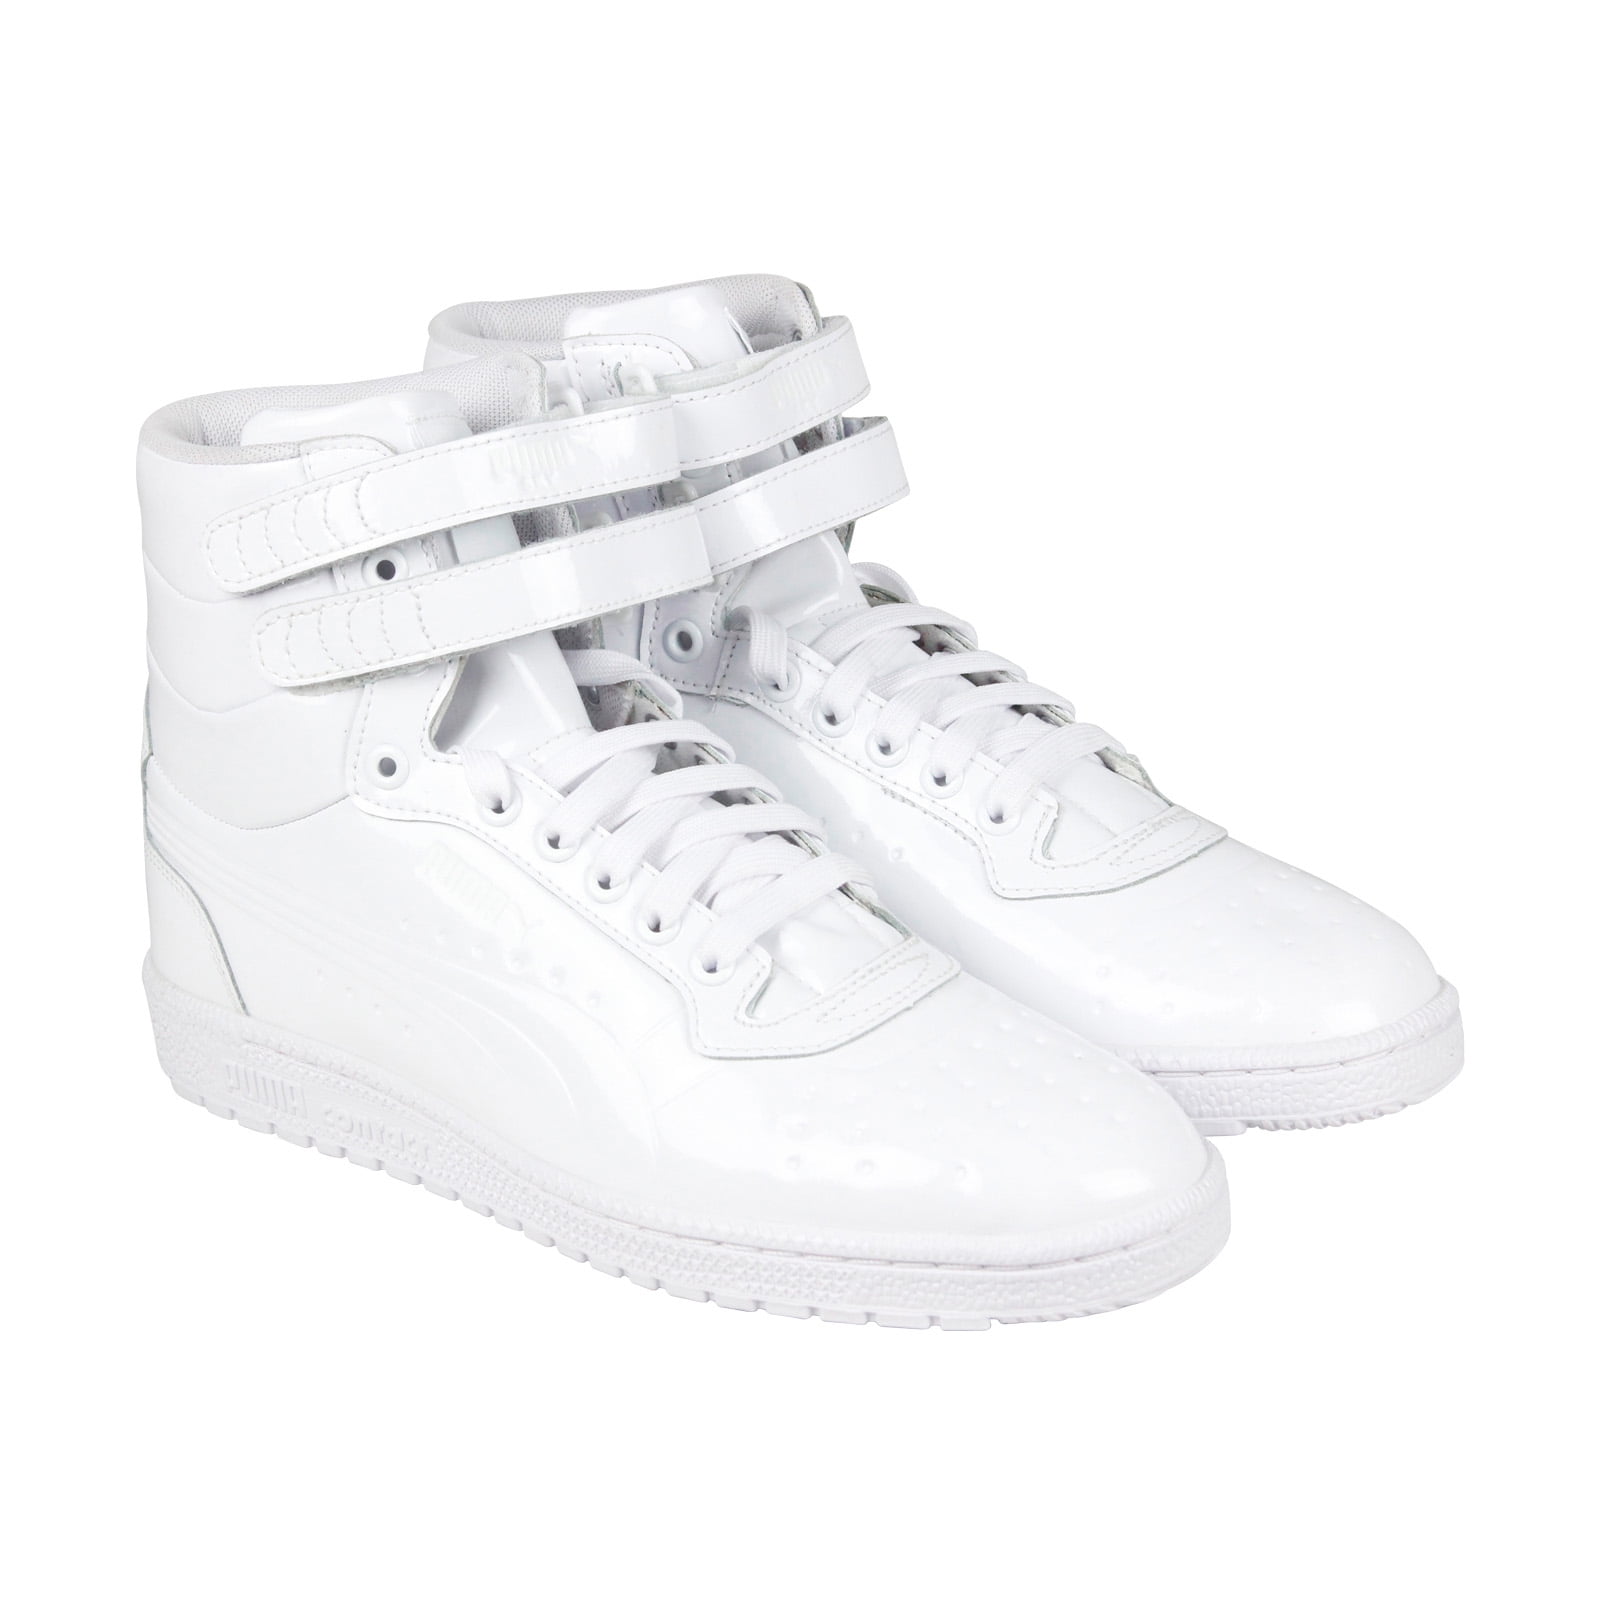 Puma II Hi Patent Emboss Mens White Patent Leather Sneakers Shoes - Walmart.com